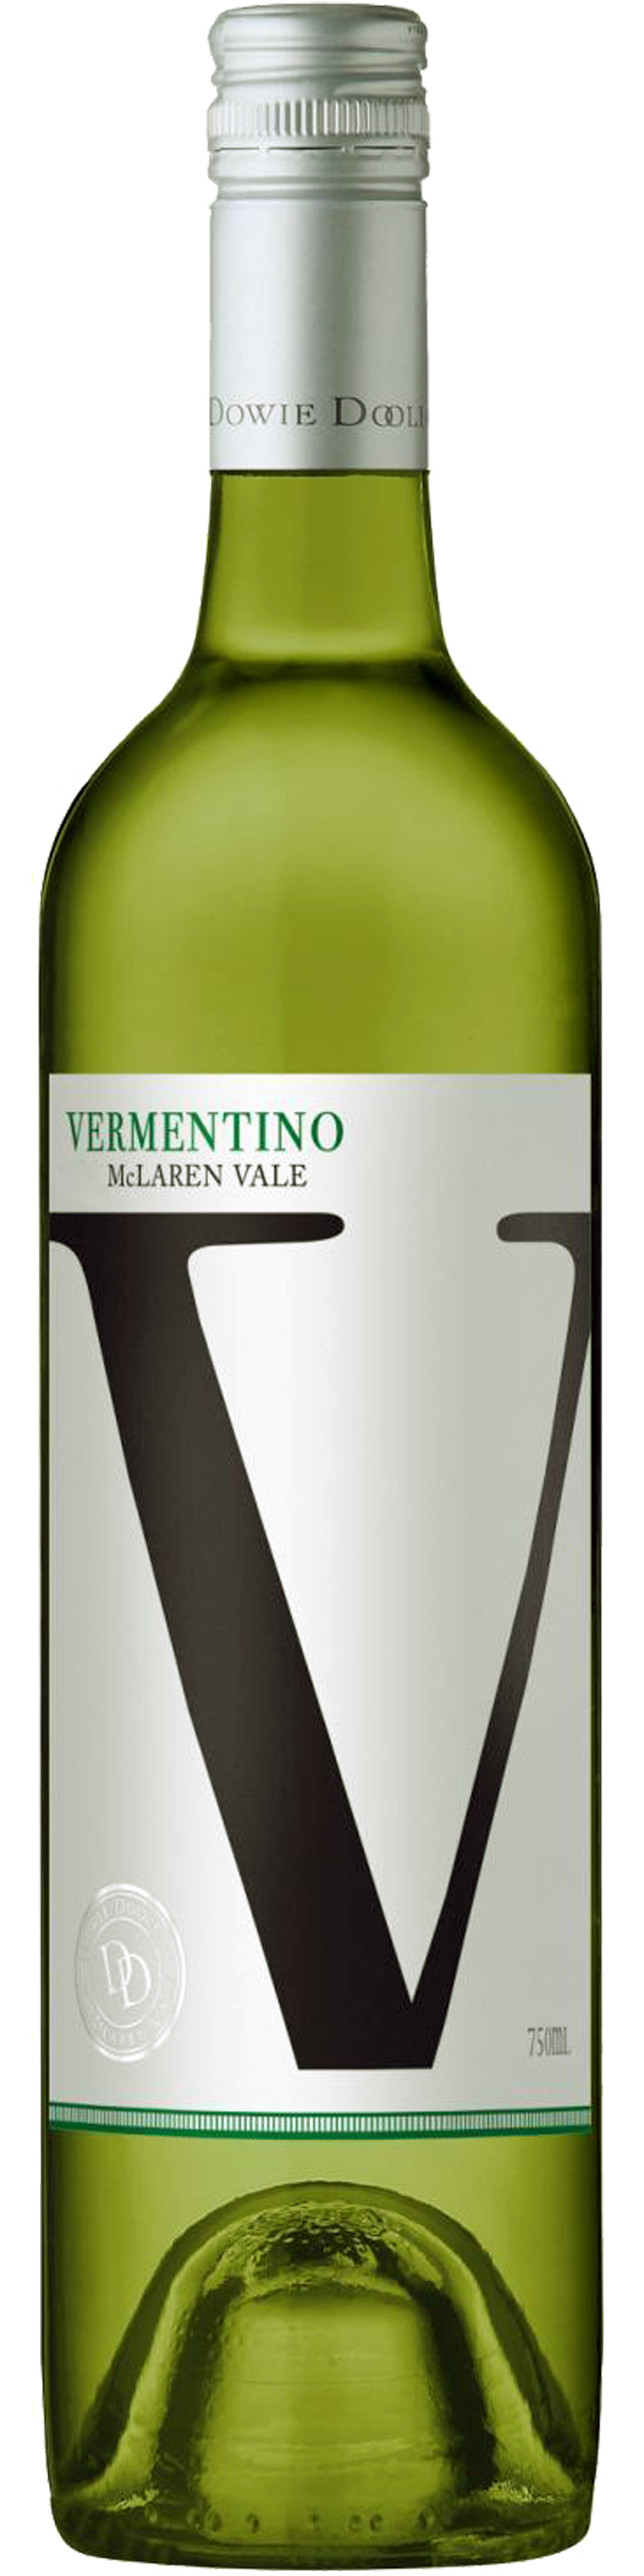 Bottle shot of 2013 Vermentino